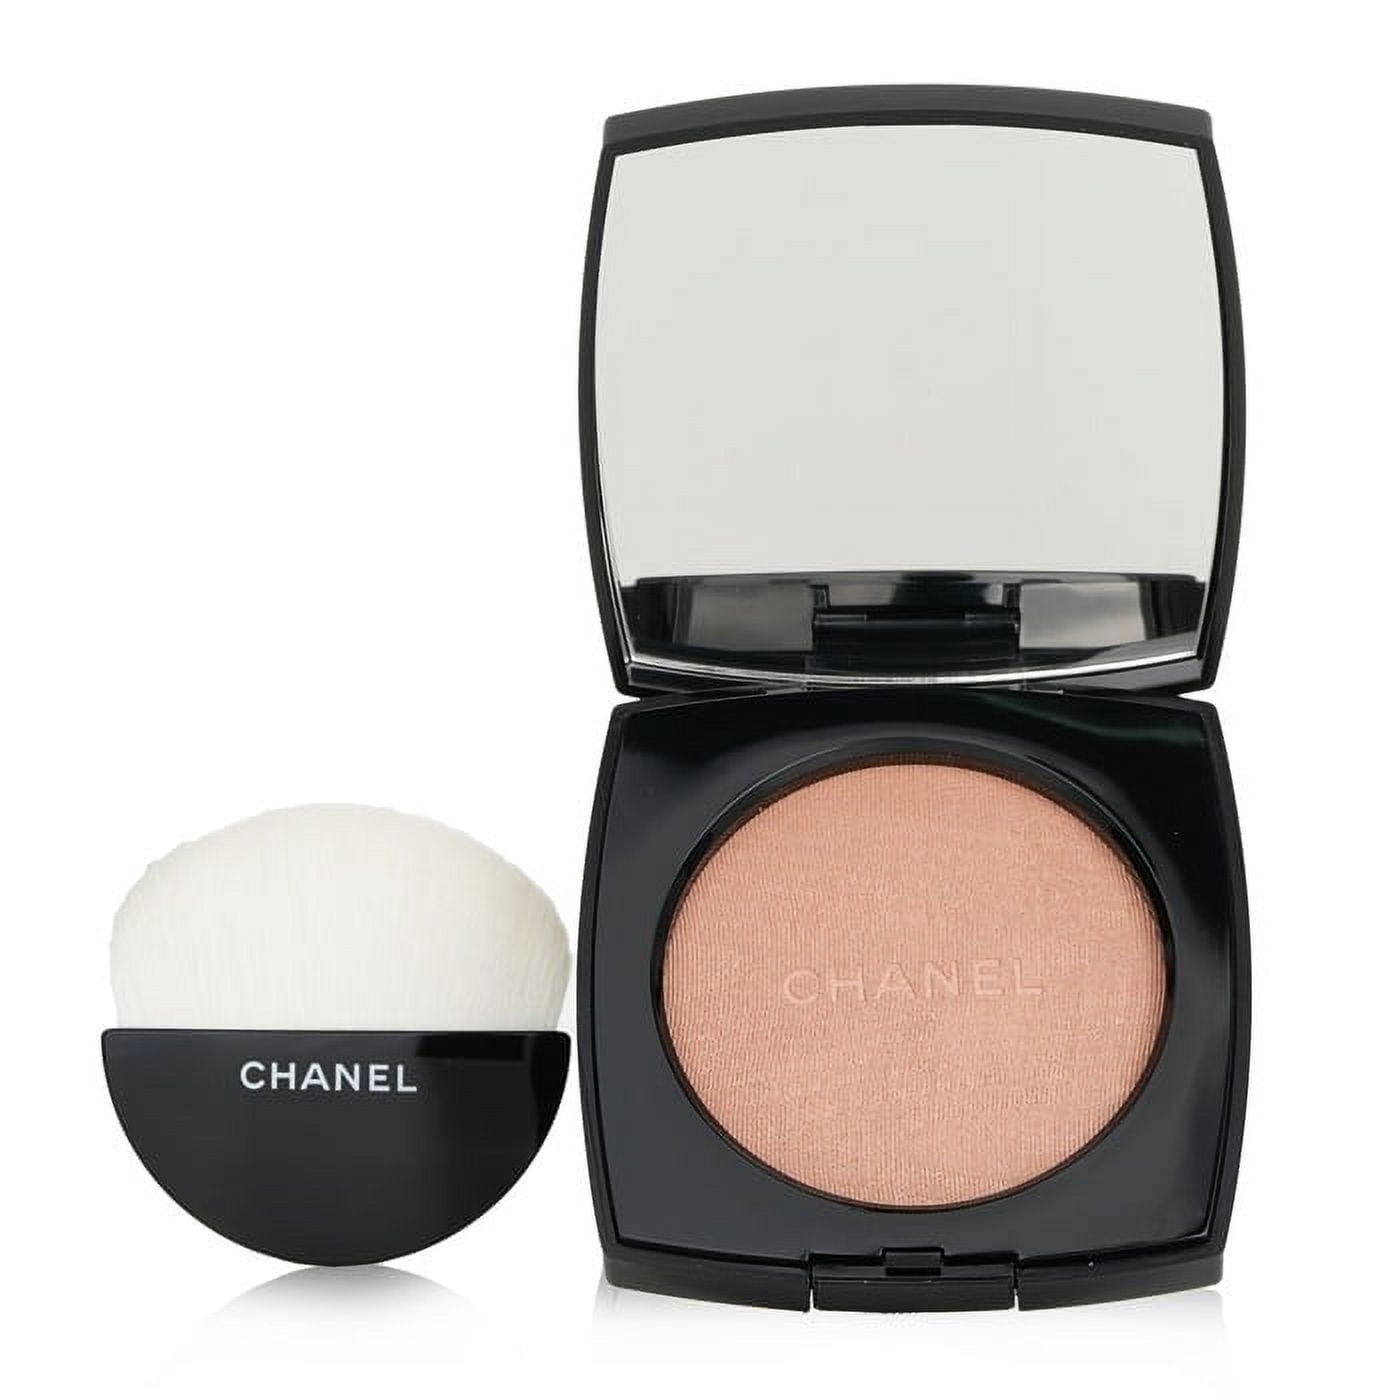 Chanel Poudre Lumiere Highlighting Powder - # 20 Warm Gold 8.5g/0.3oz